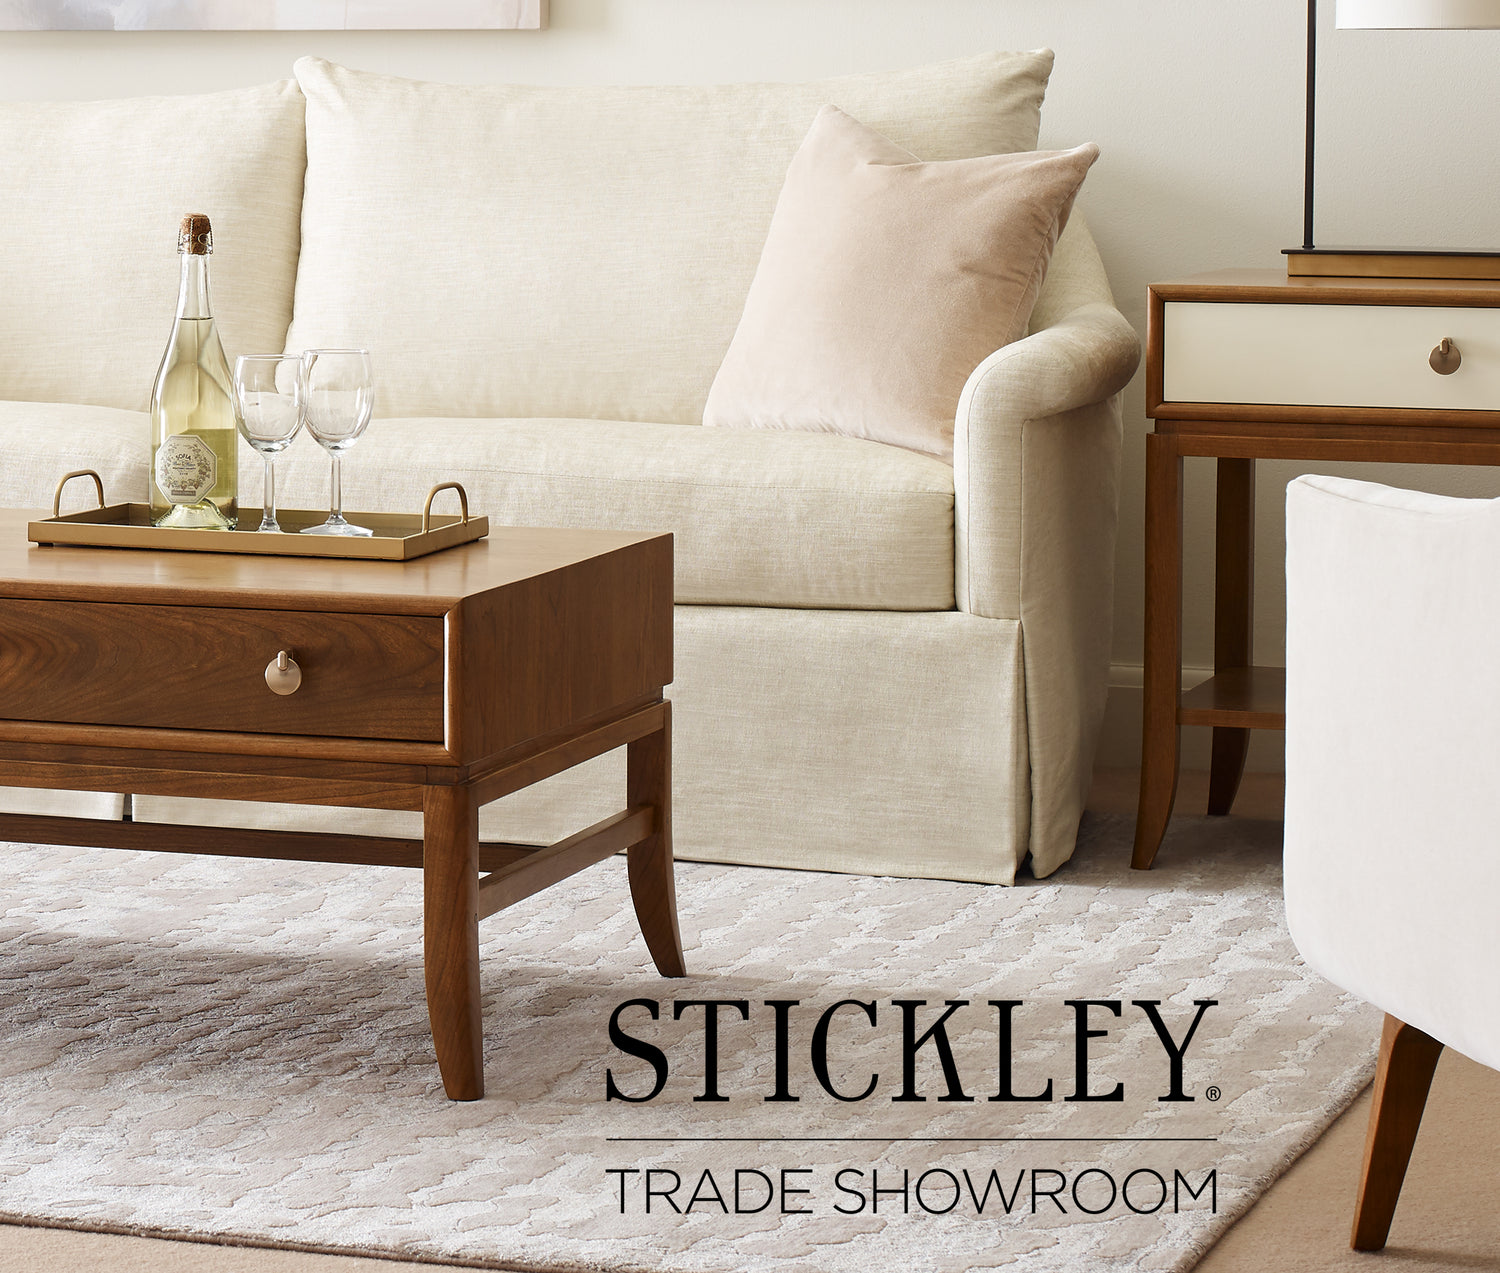 Stickley Trade Showroom